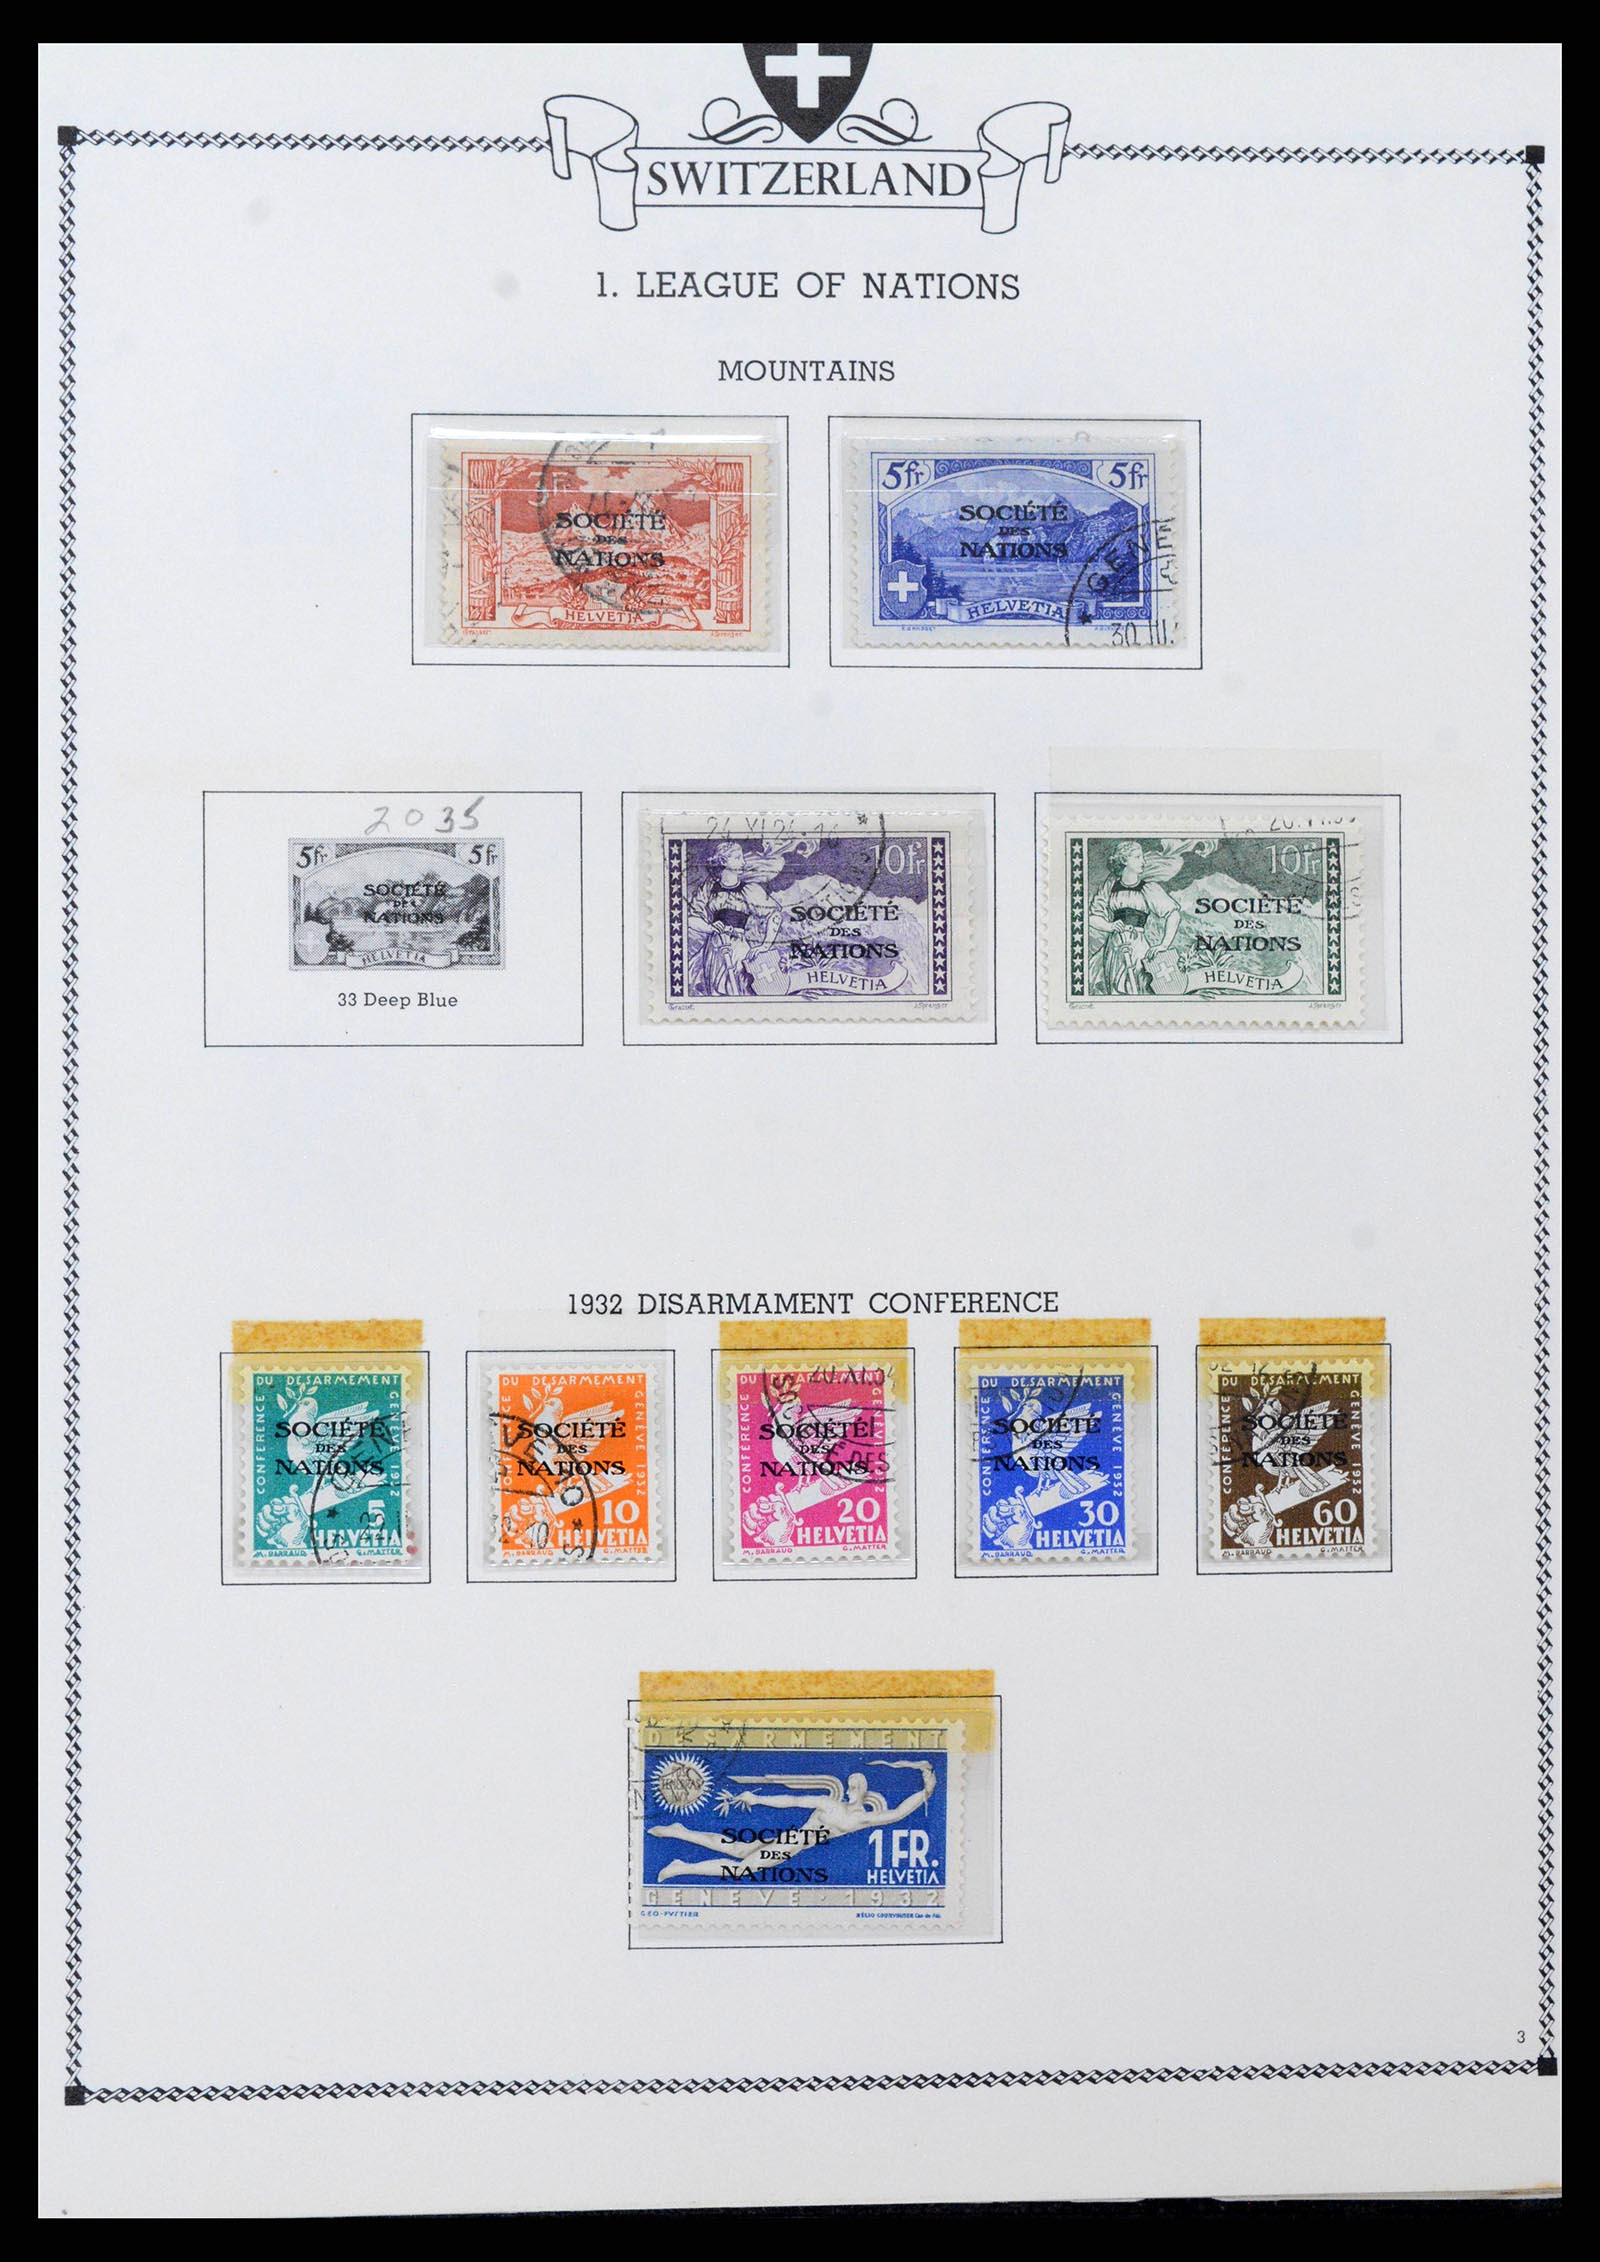 38905 0186 - Stamp collection 38905 Switzerland 1850-1995.